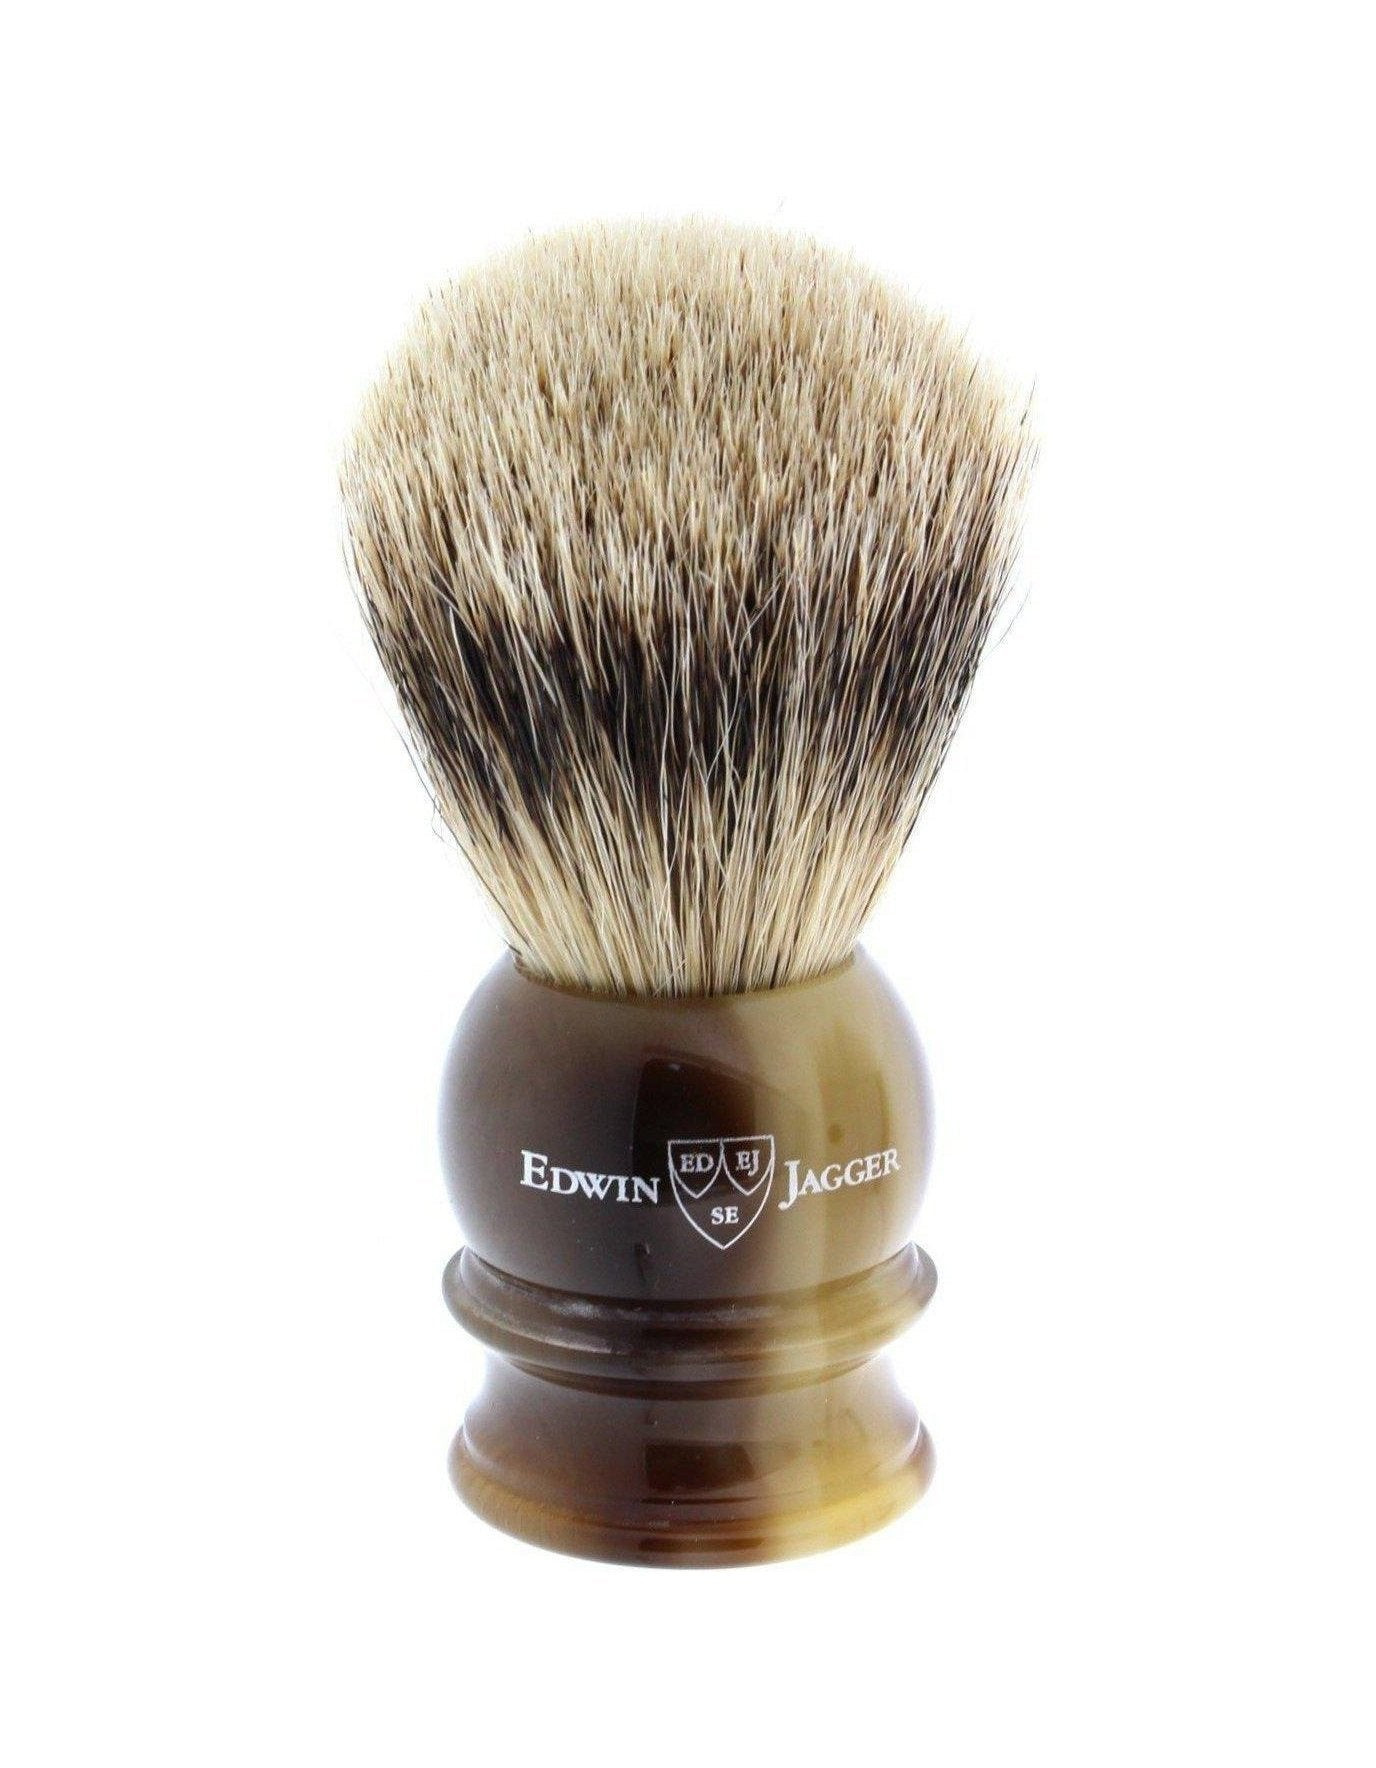 Product image 1 for Edwin Jagger Silver Tip Badger Shaving Brush, Medium, Imitation Horn